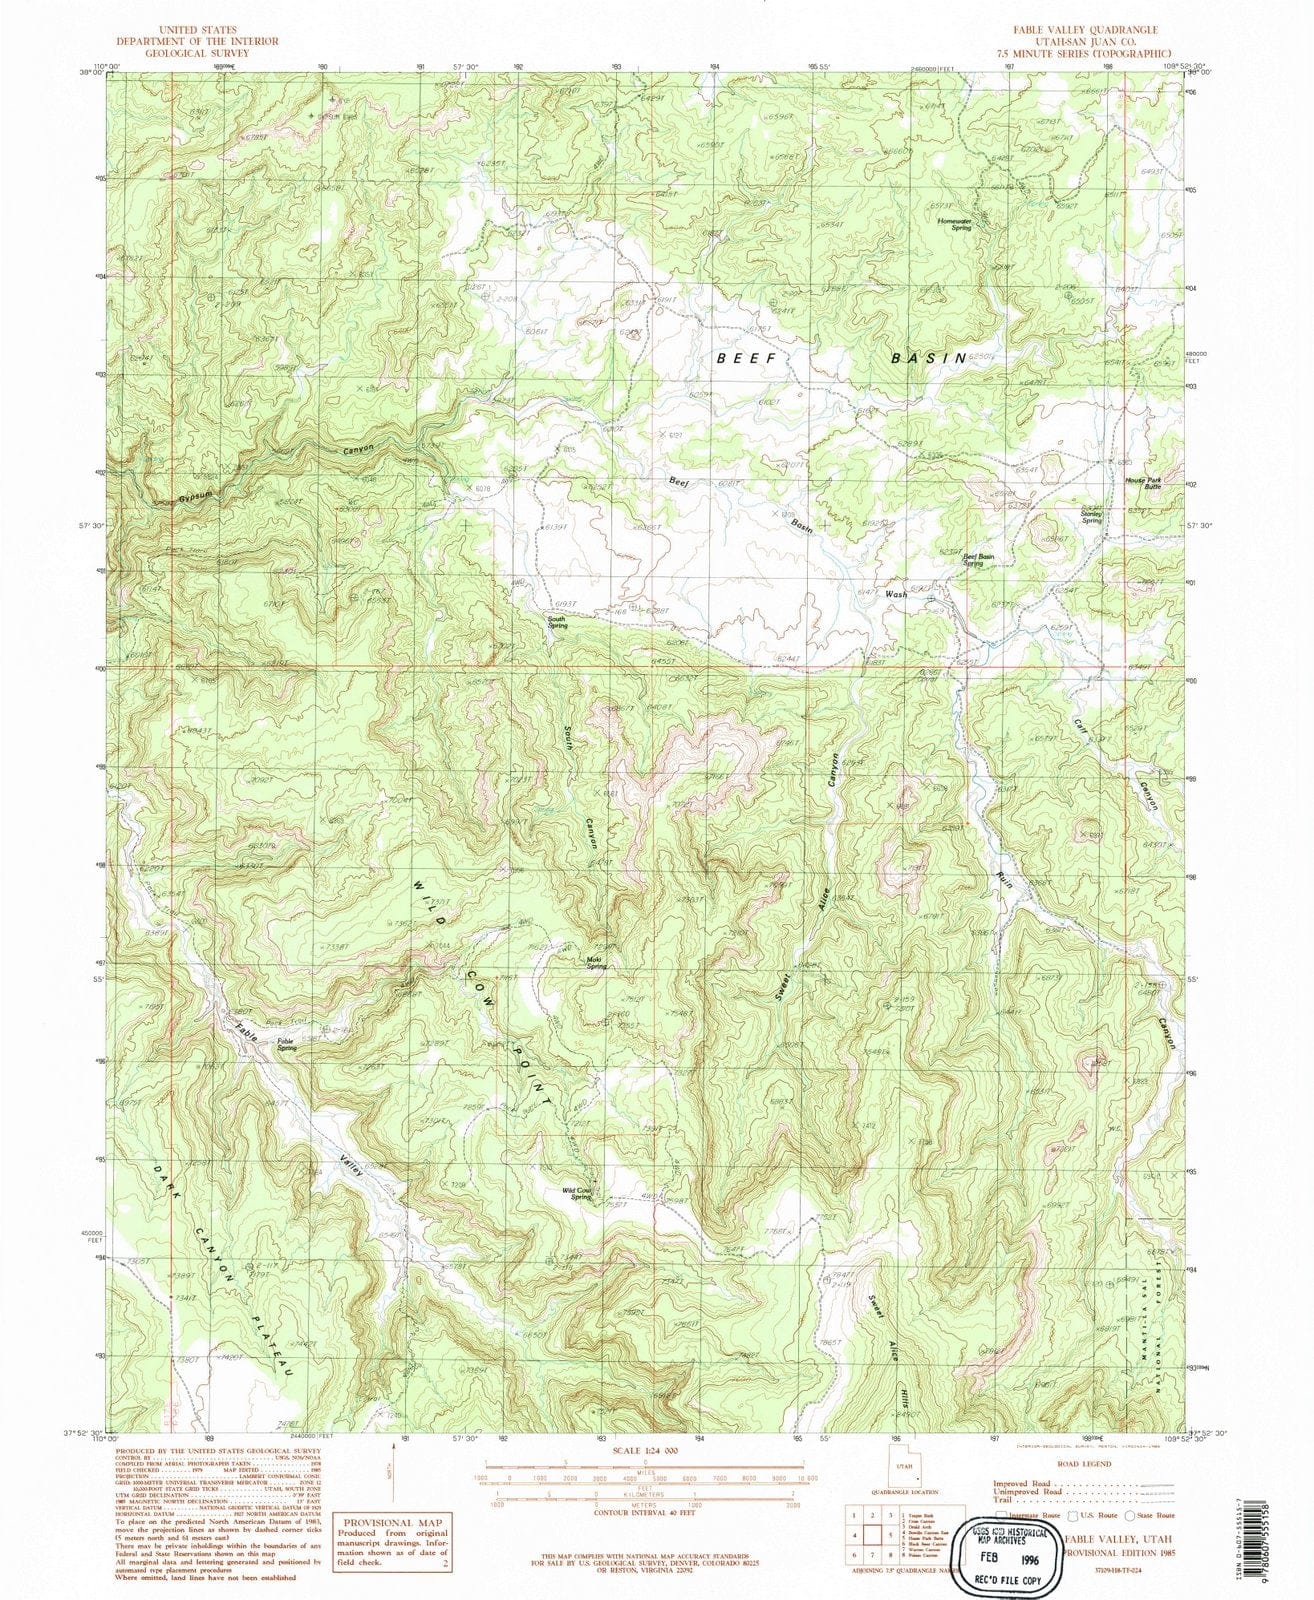 1985 Fable Valley, UT - Utah - USGS Topographic Map